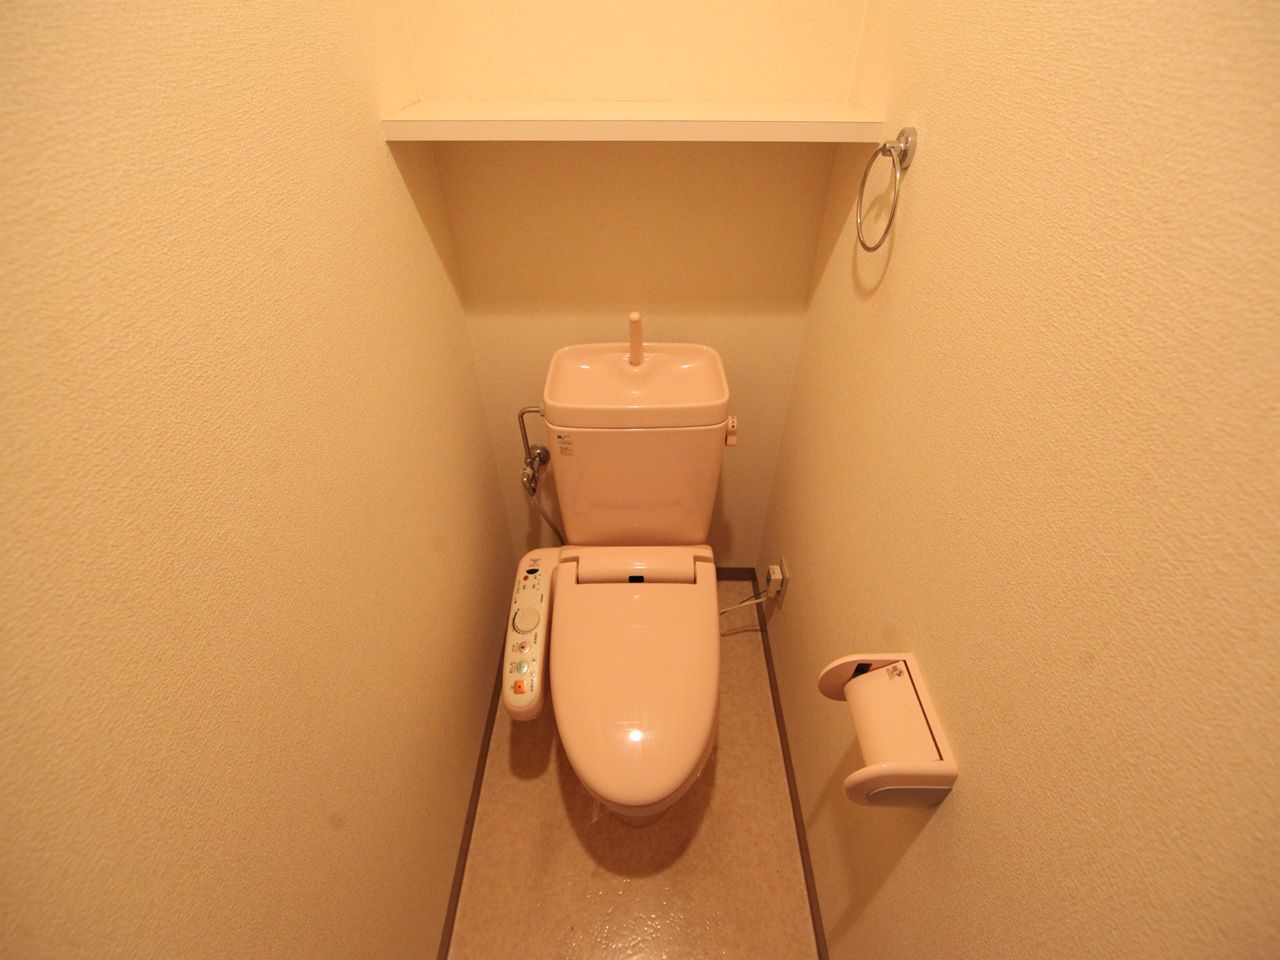 Toilet. Toilet with warm water washing toilet seat With shelf